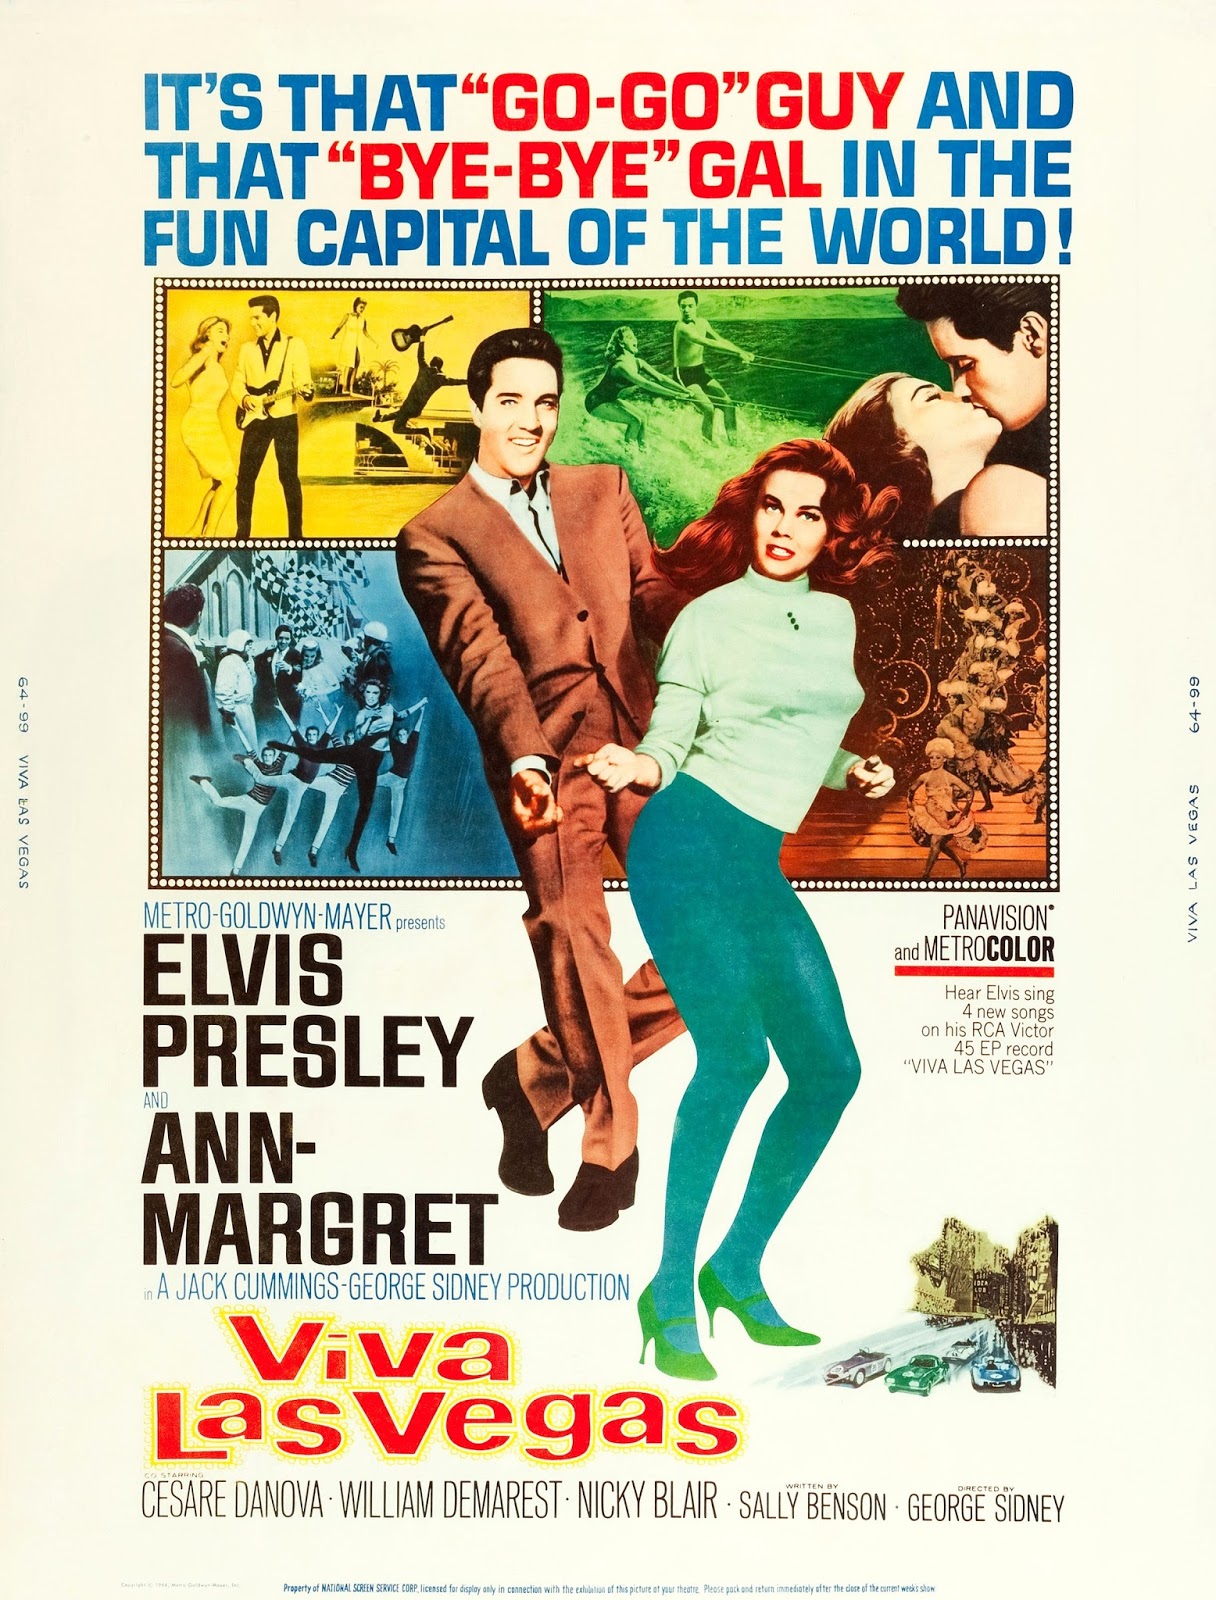 Film Guru Lad - Film Reviews: Viva Las Vegas Review